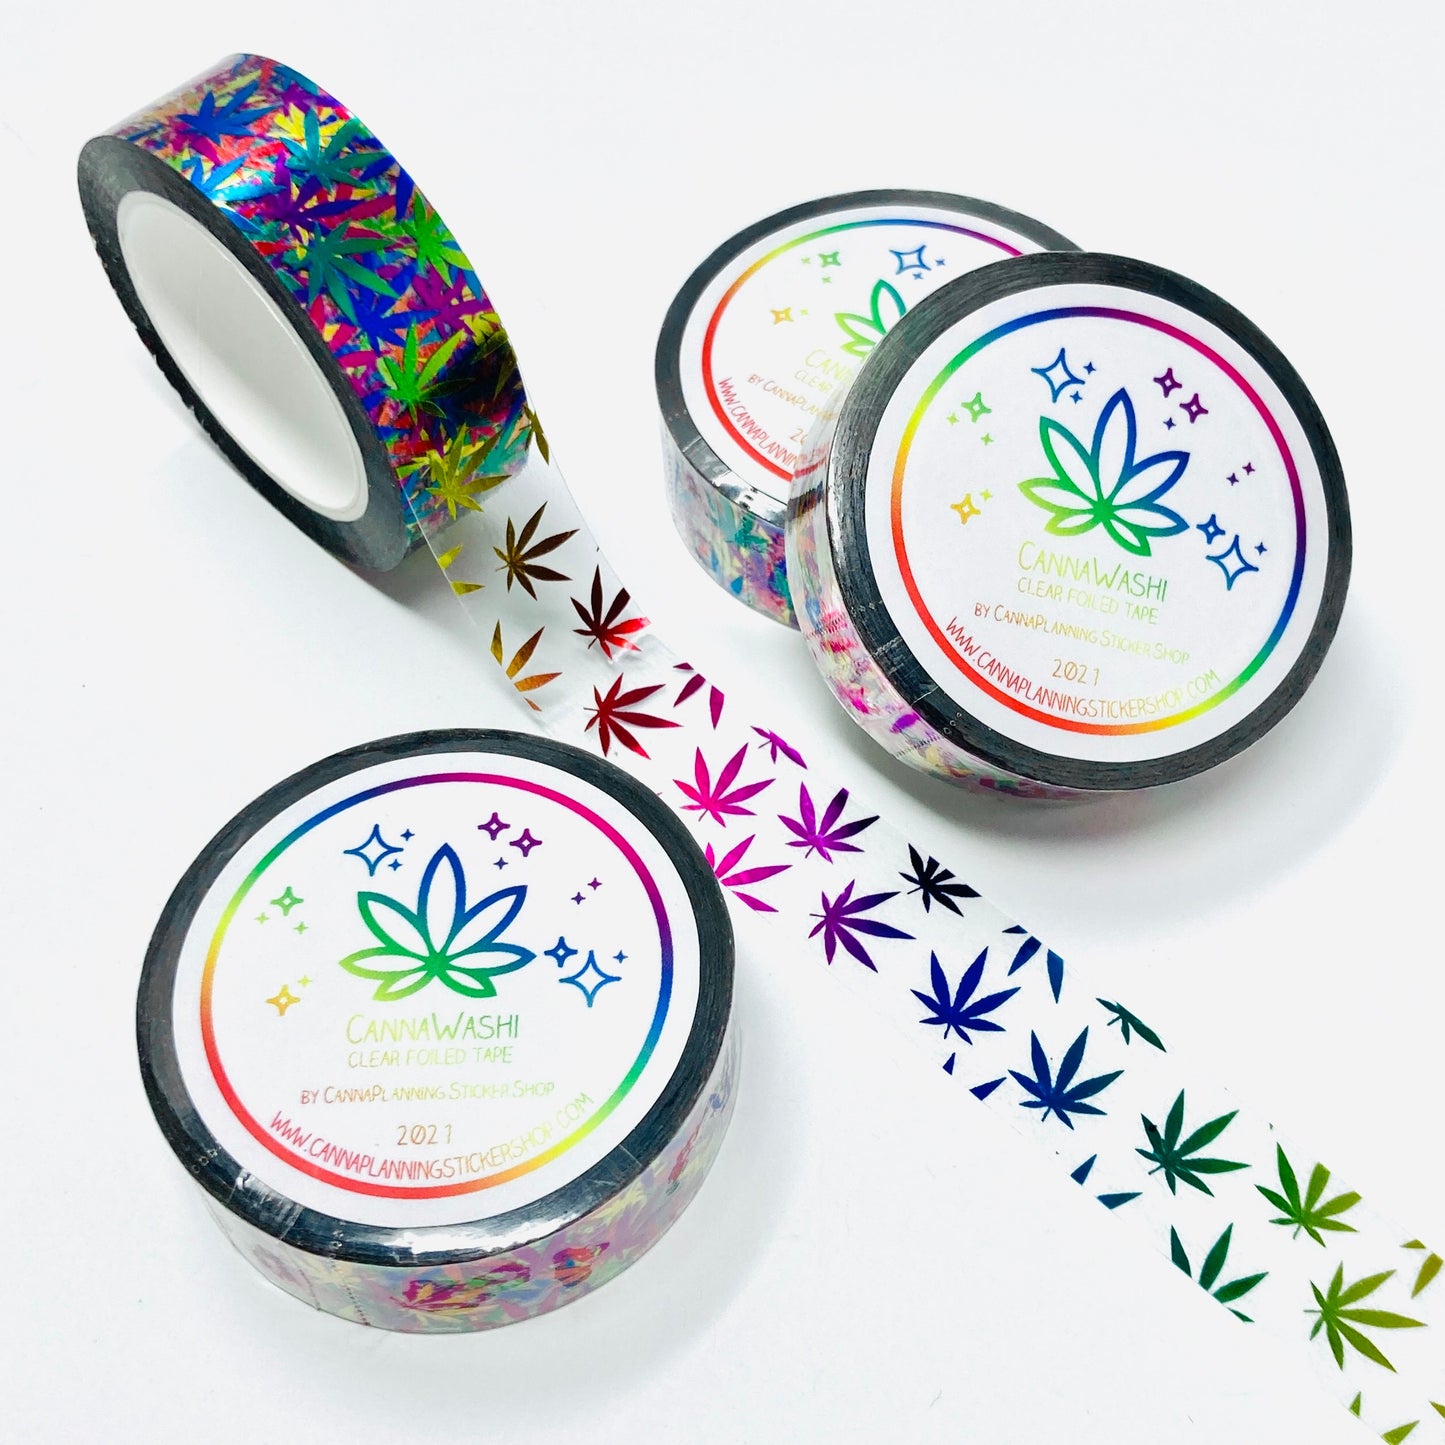 PAIR (2 rolls) Rainbow Foil Marijuana Washi Clear Tape - 20mm and 15mm Stylized leaves 